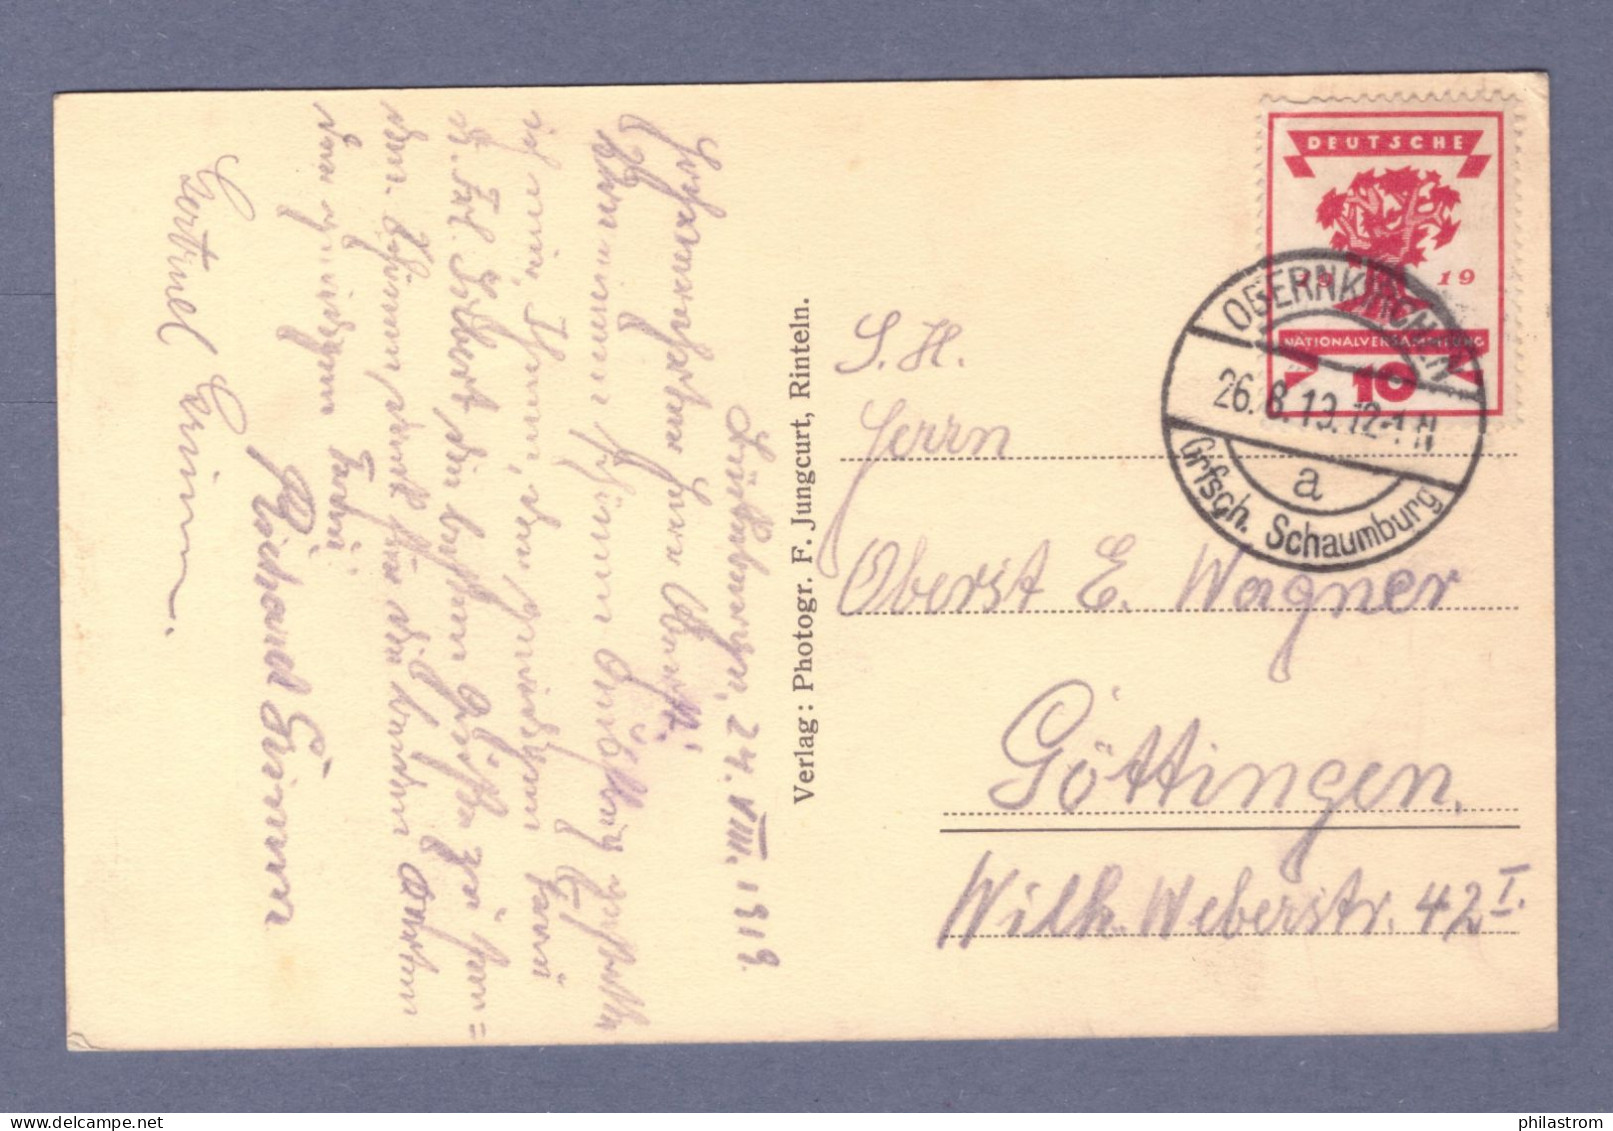 Weimar INFLA AK (Gasthaus Zum Bückeberg) Postkarte - Obekirchen Grfsch. Schaumburg 26.8.19 (CG13110-264) - Brieven En Documenten